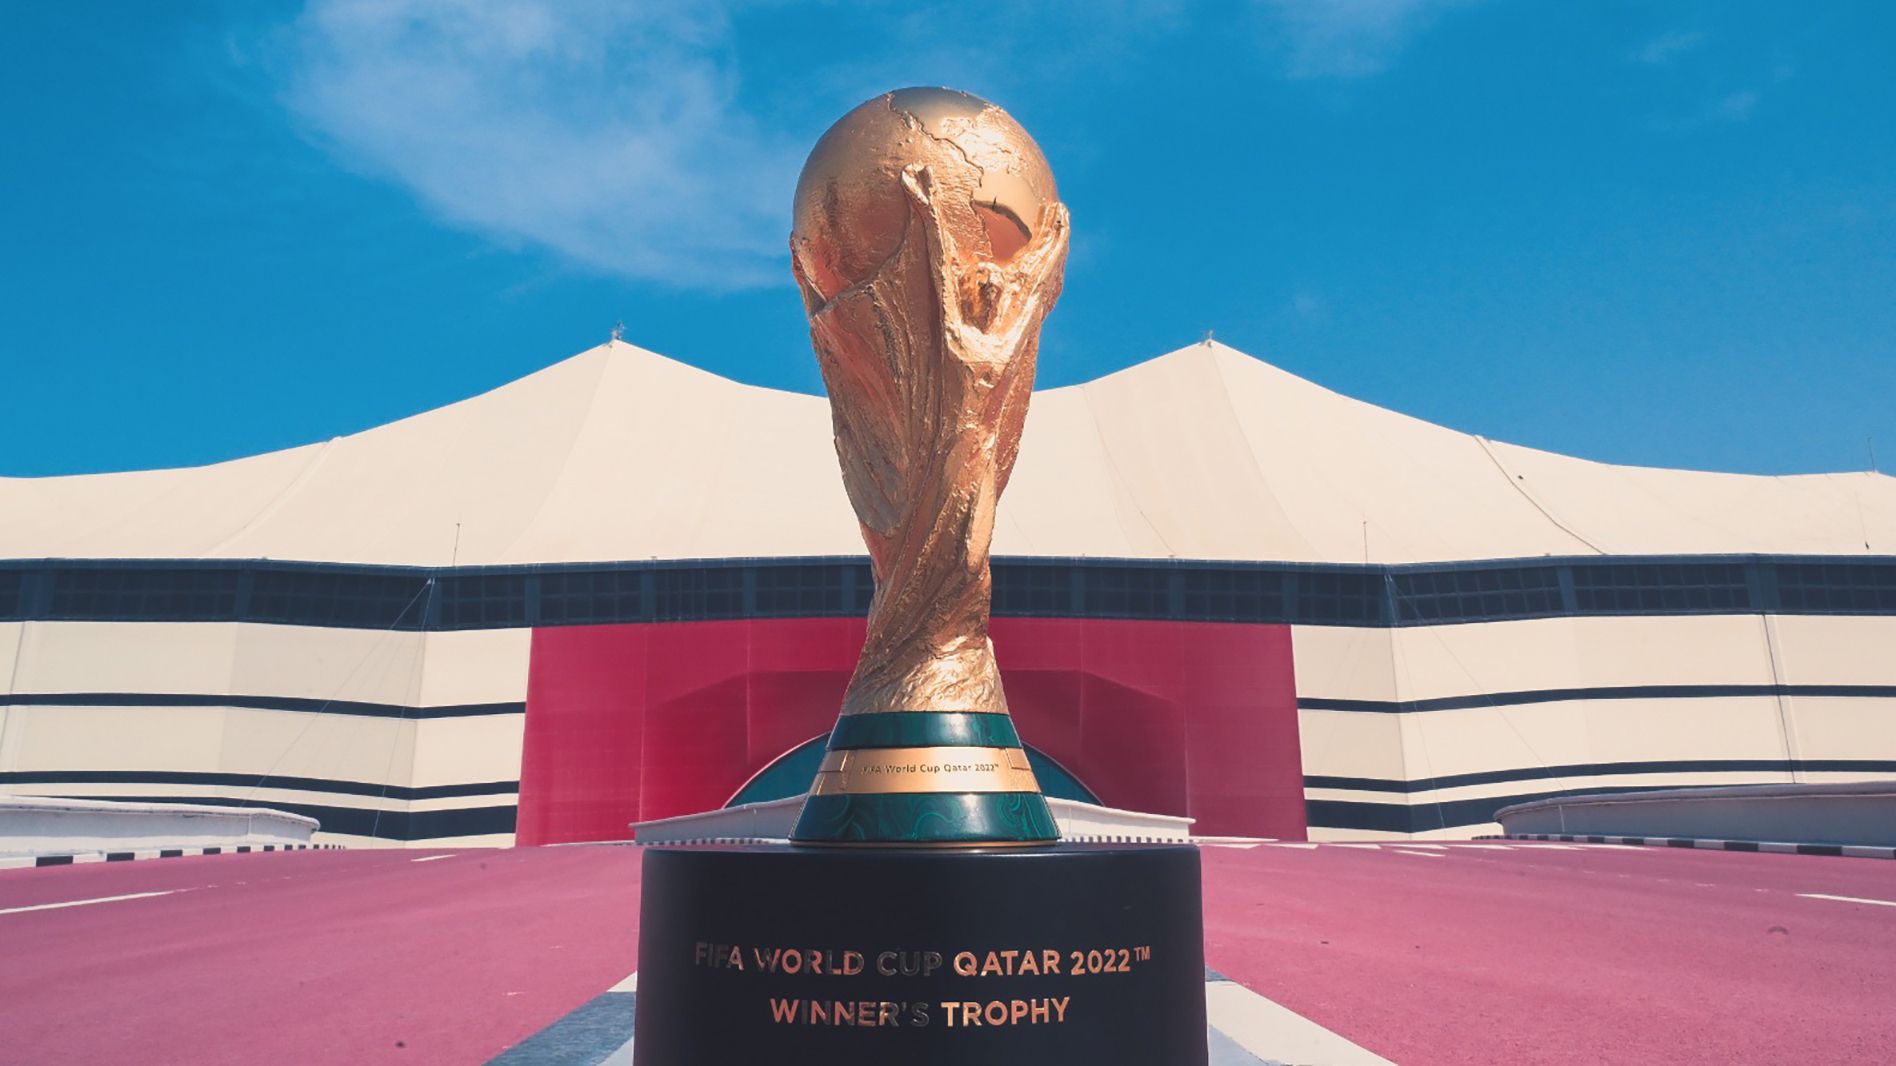 Sorteo Mundial Qatar 2022